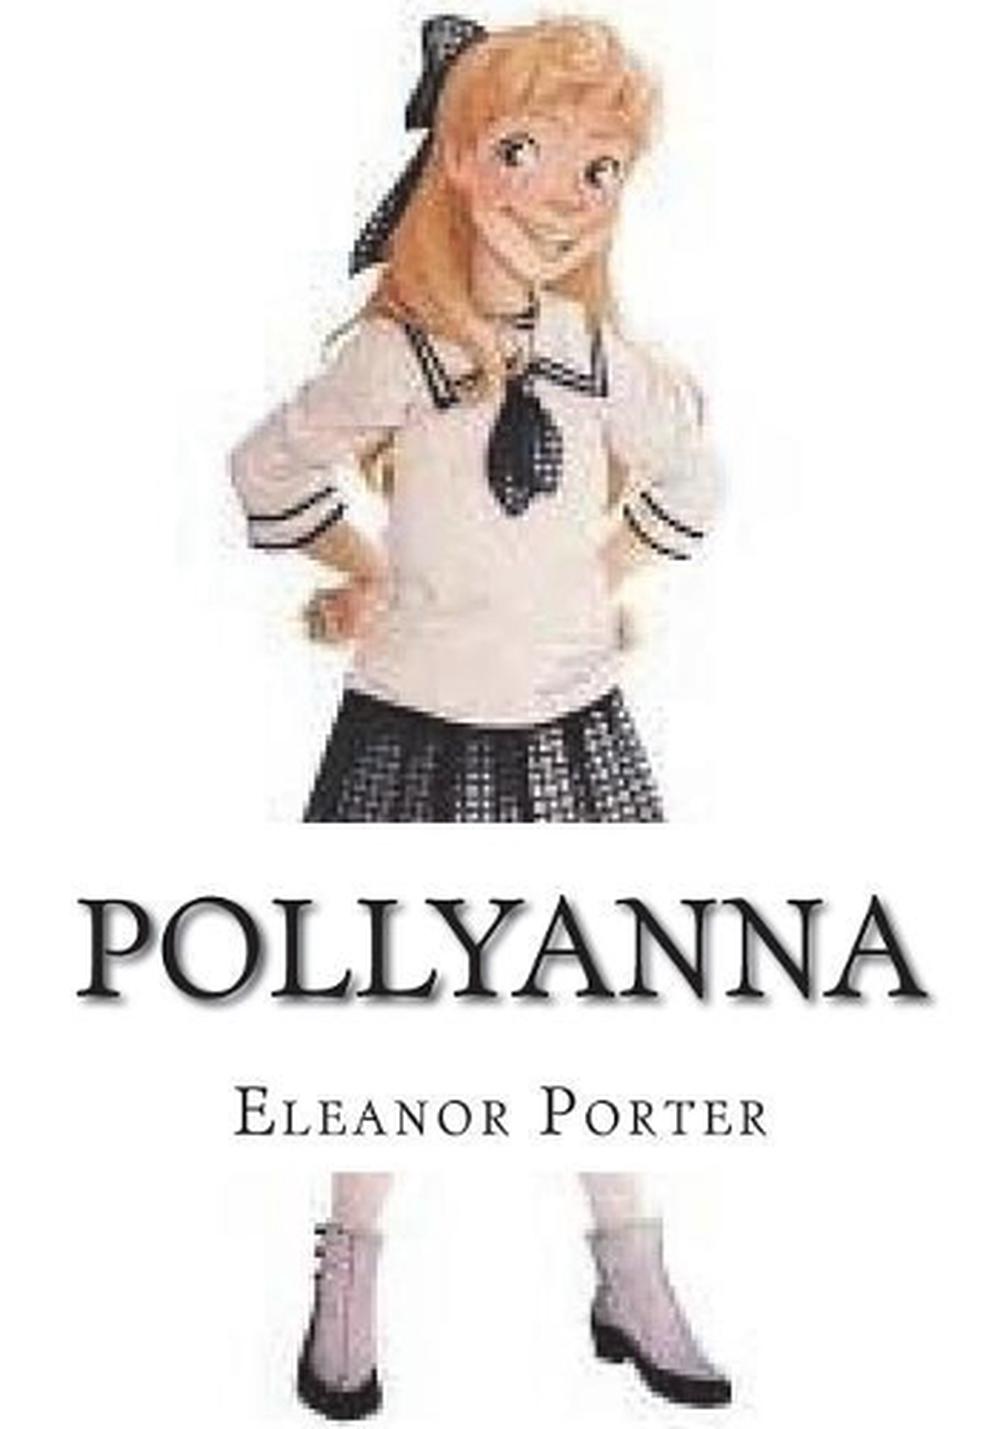 pollyanna book author